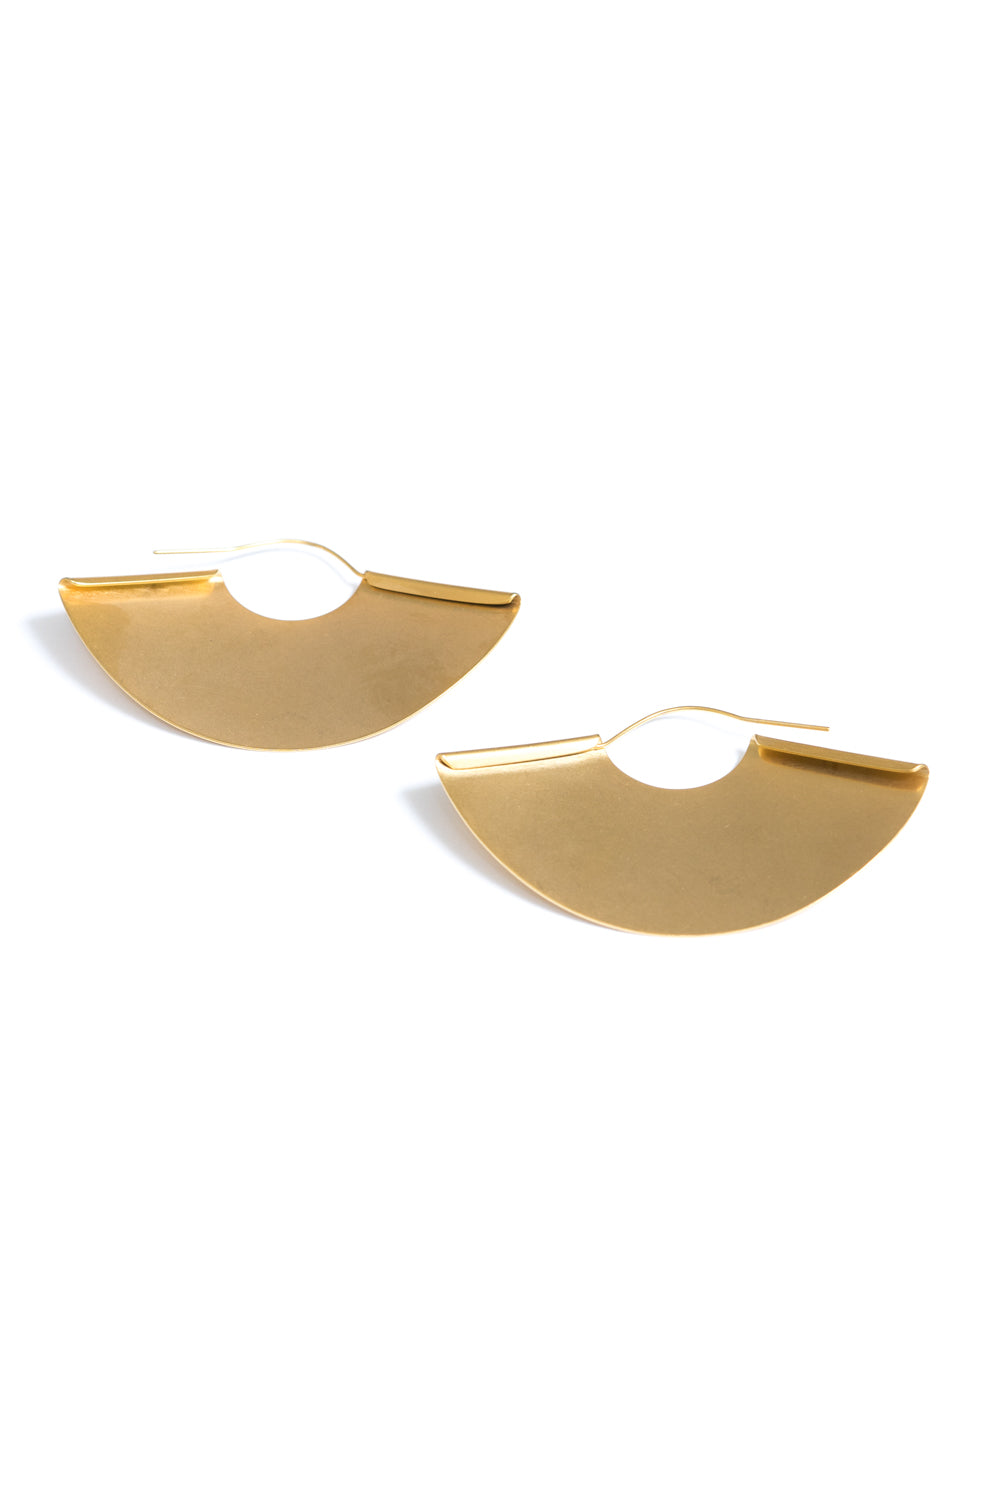 Nayima Fan Earrings | 18k Gold Plating